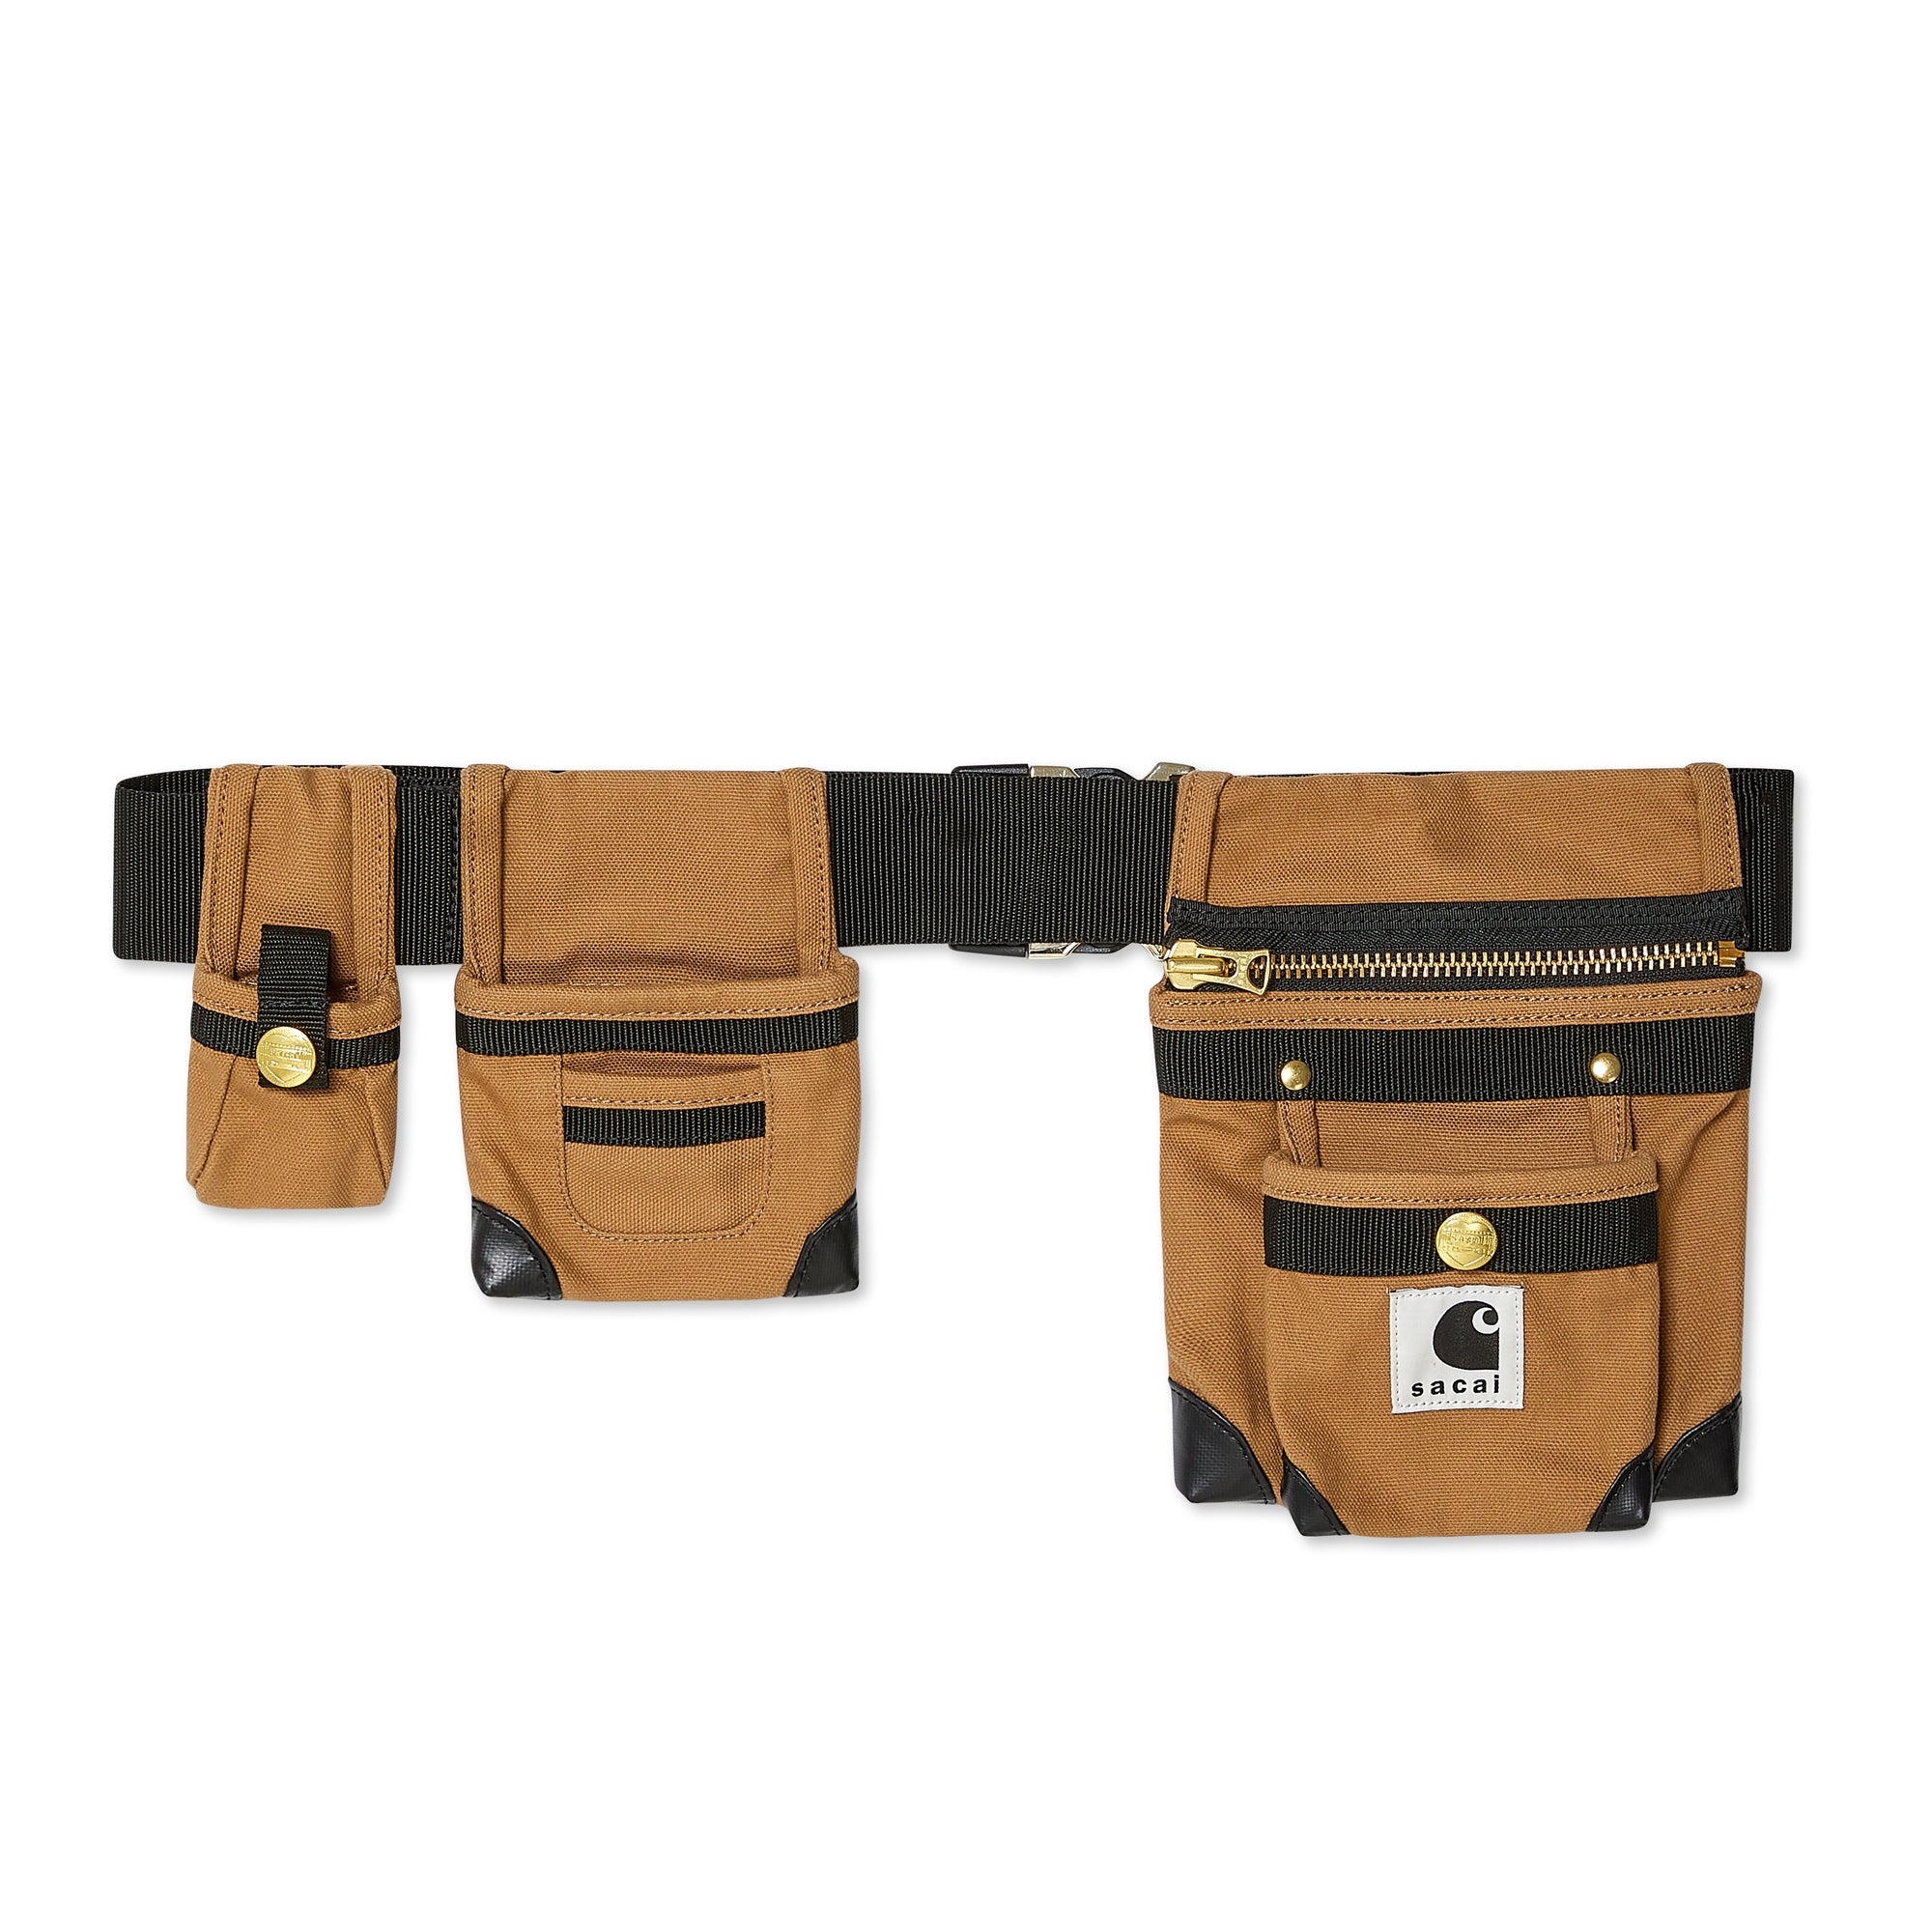 sacai - Carhartt WIP Pocket Bag - (Beige) view 1